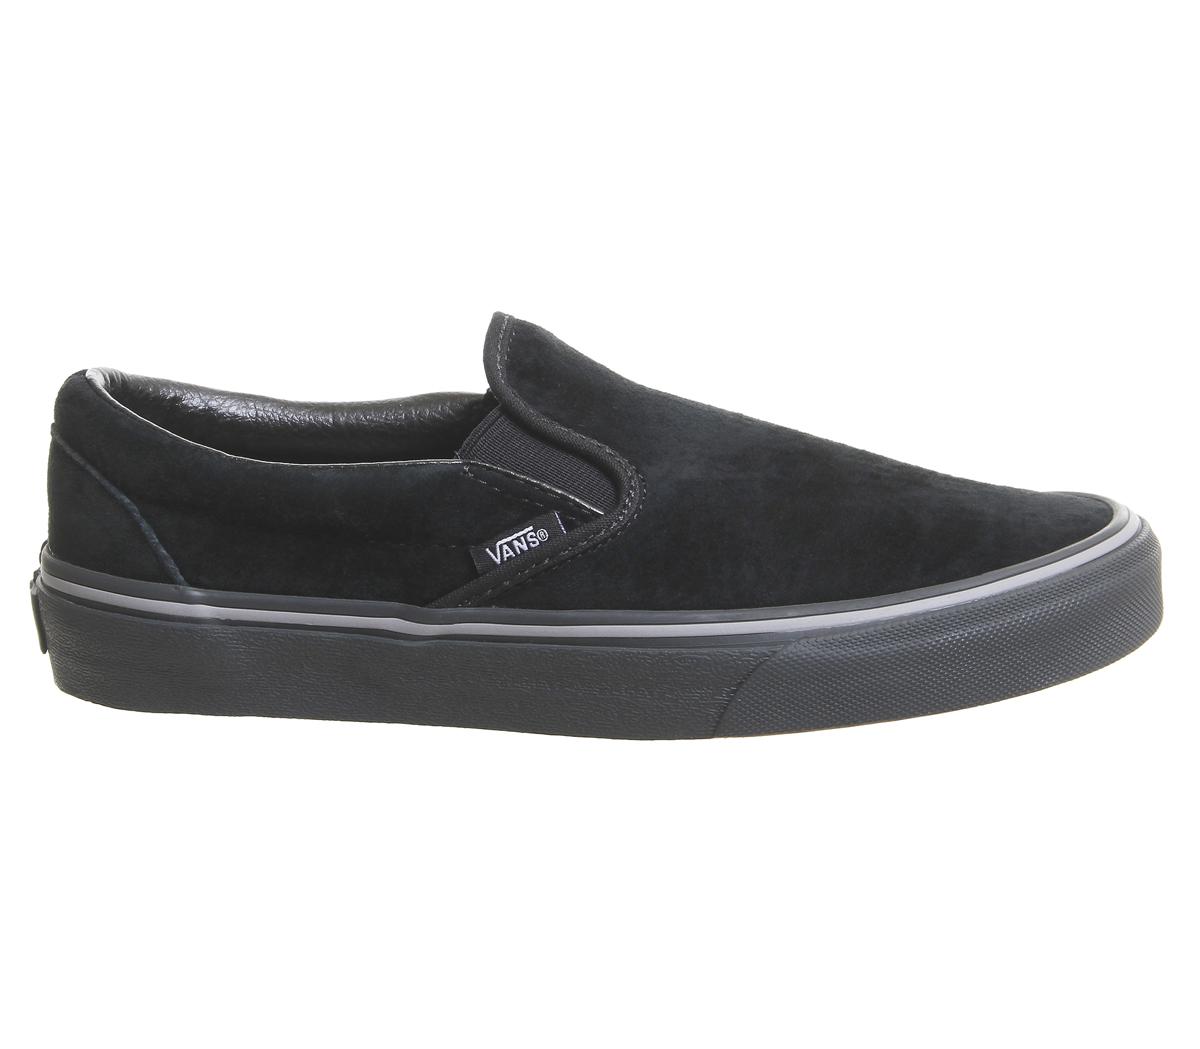 vans classic slip on black frost grey 